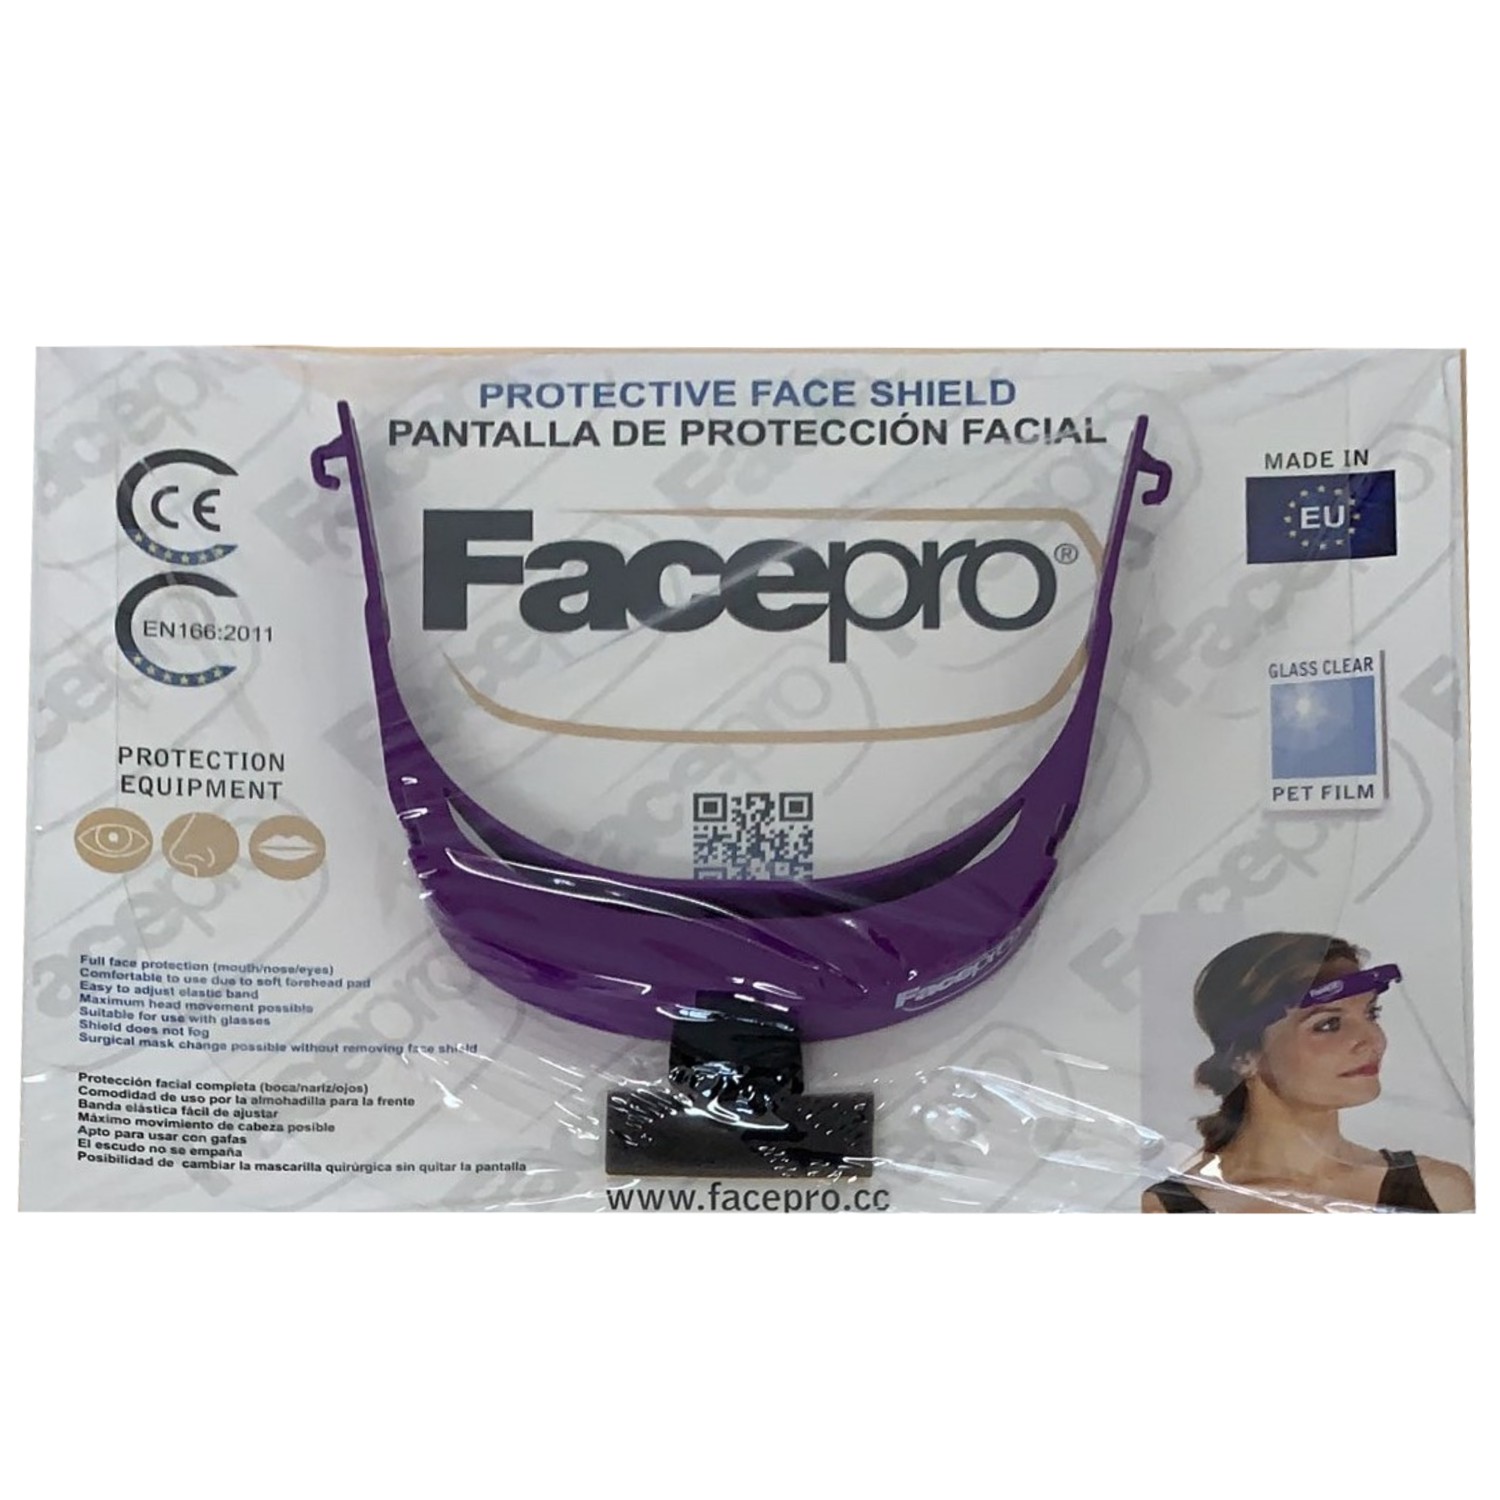 FACE PRO Protective Face Shield violett